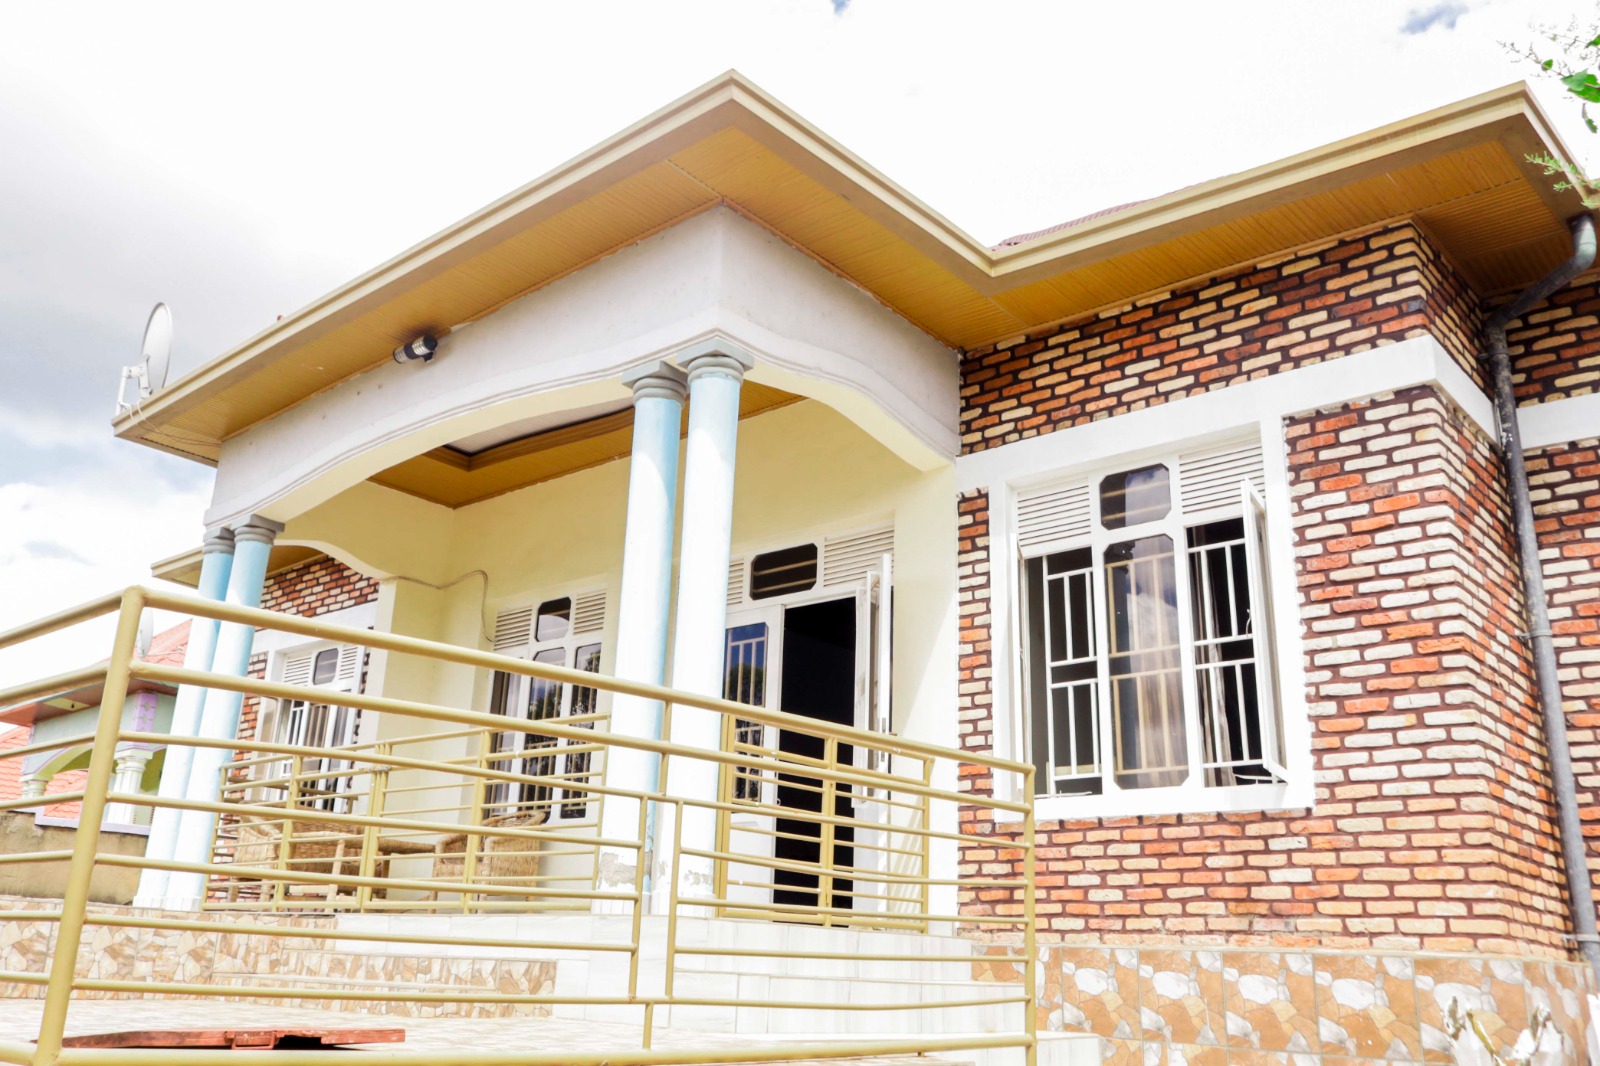 RR 027: Gahanga kicukiro; beautiful House for sale with big car parking; in kigali-RwandaCall/watsap +250788385831